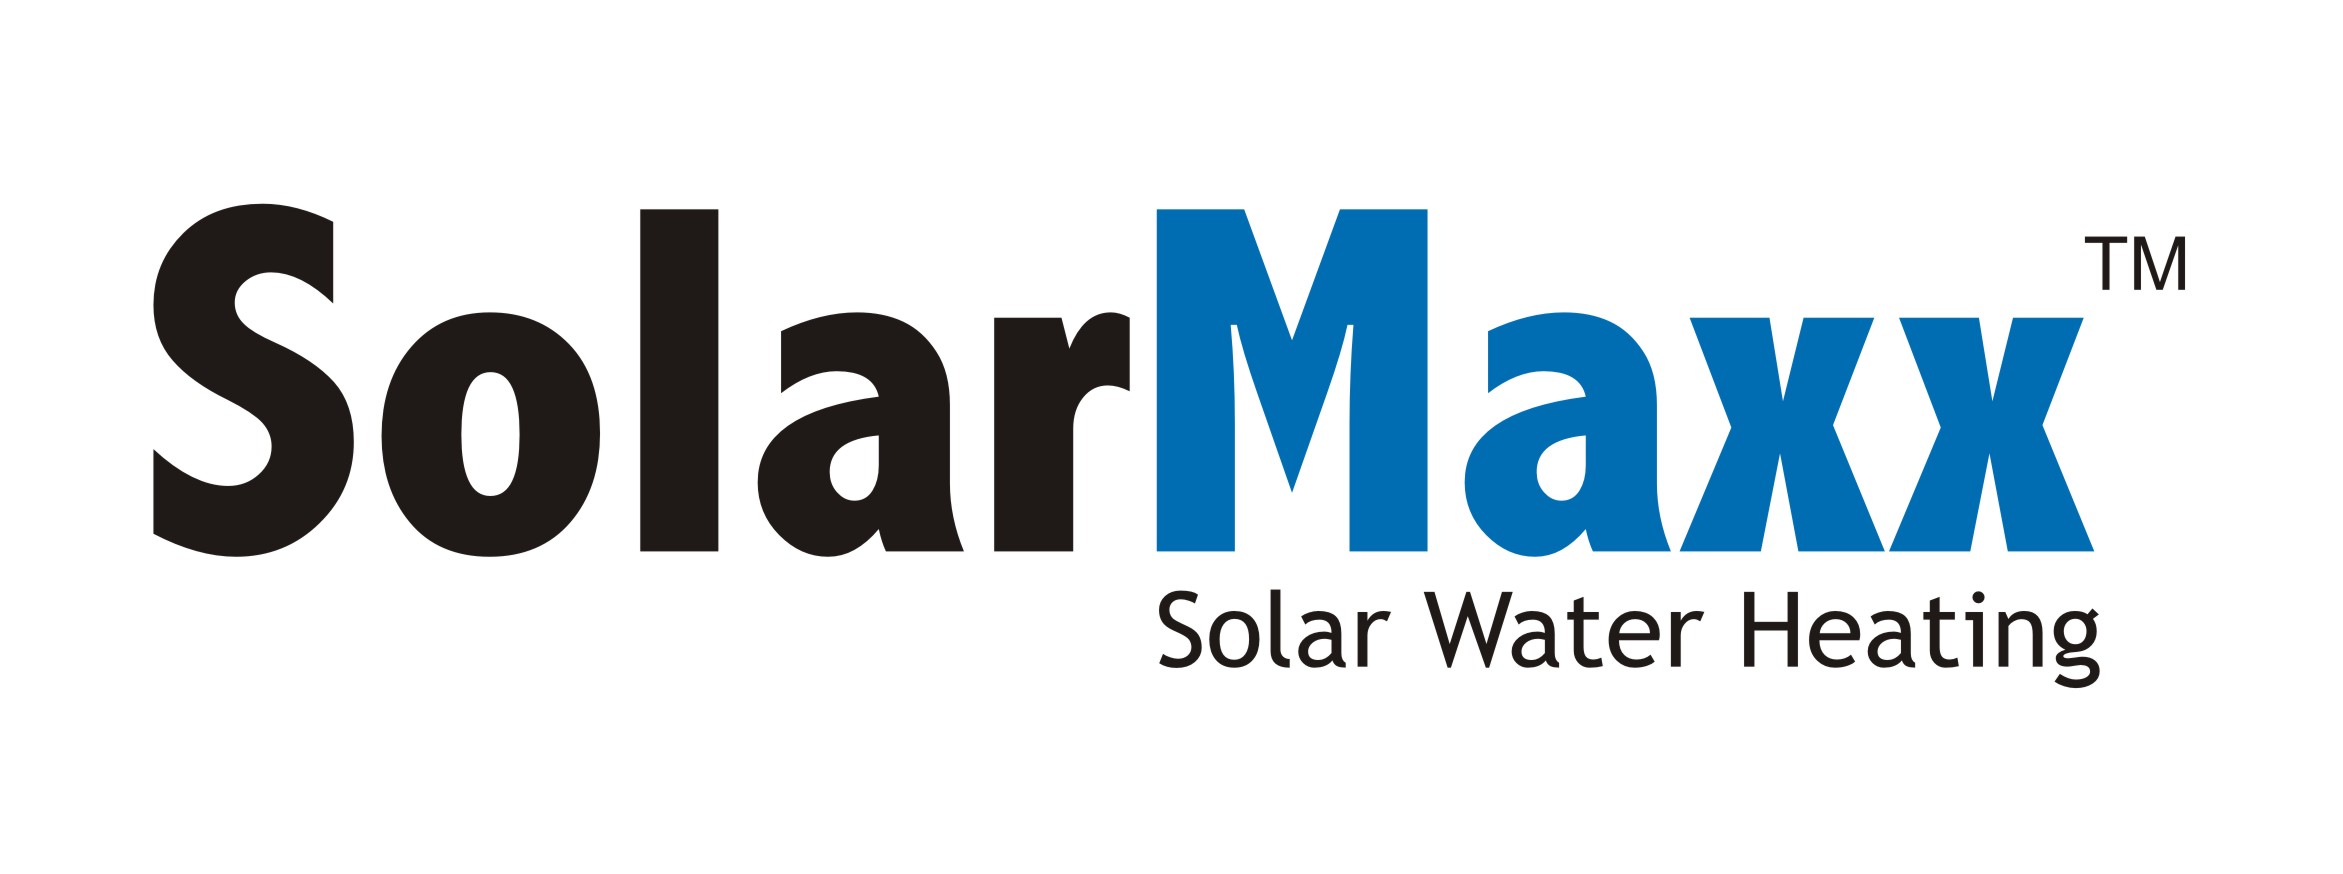 SolarMaxx Solar Water Heating